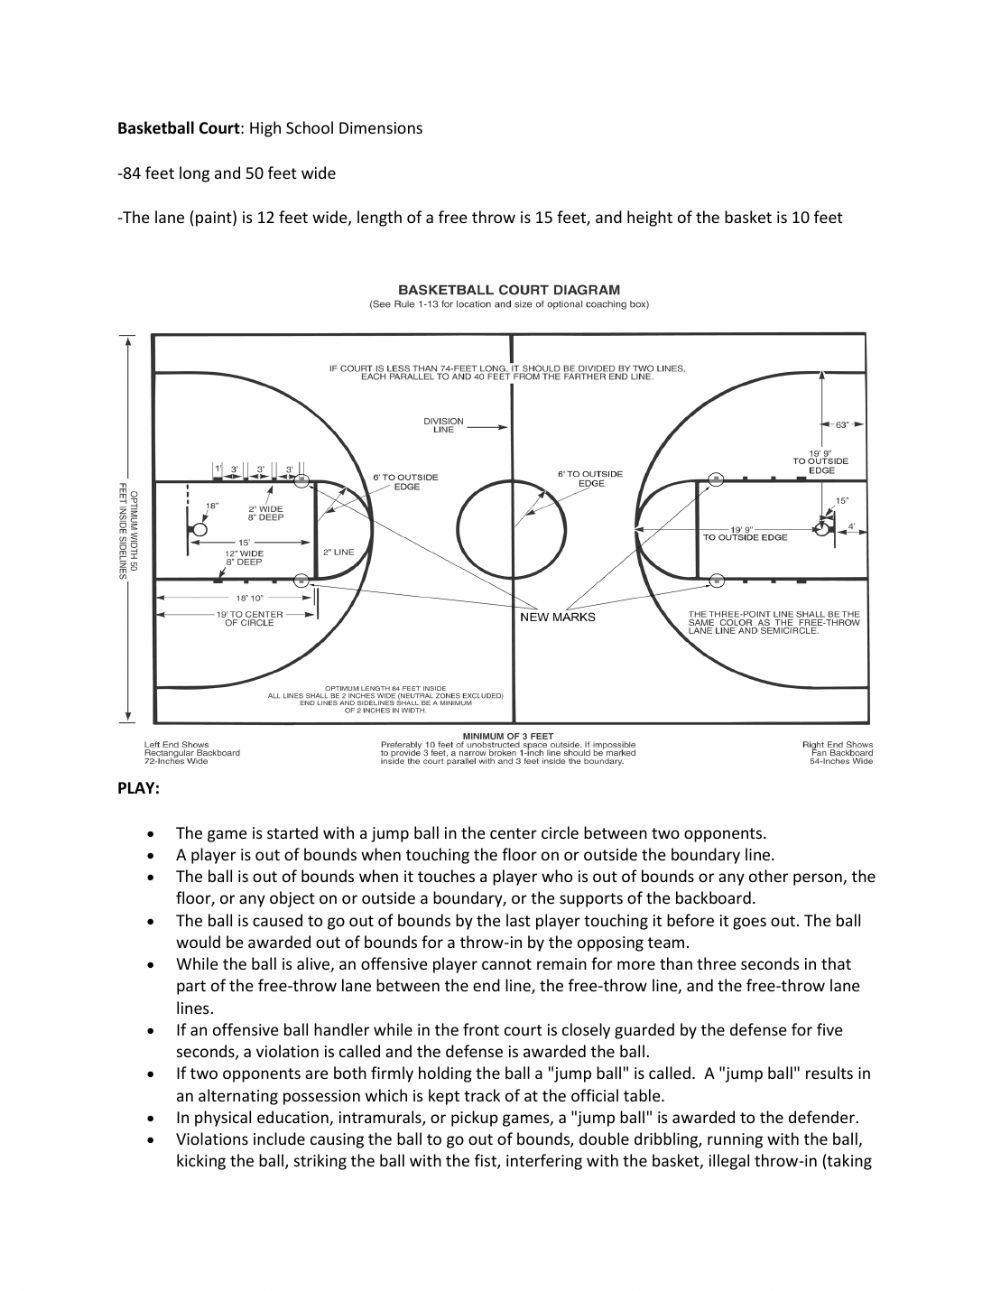 Basketball Study Guide